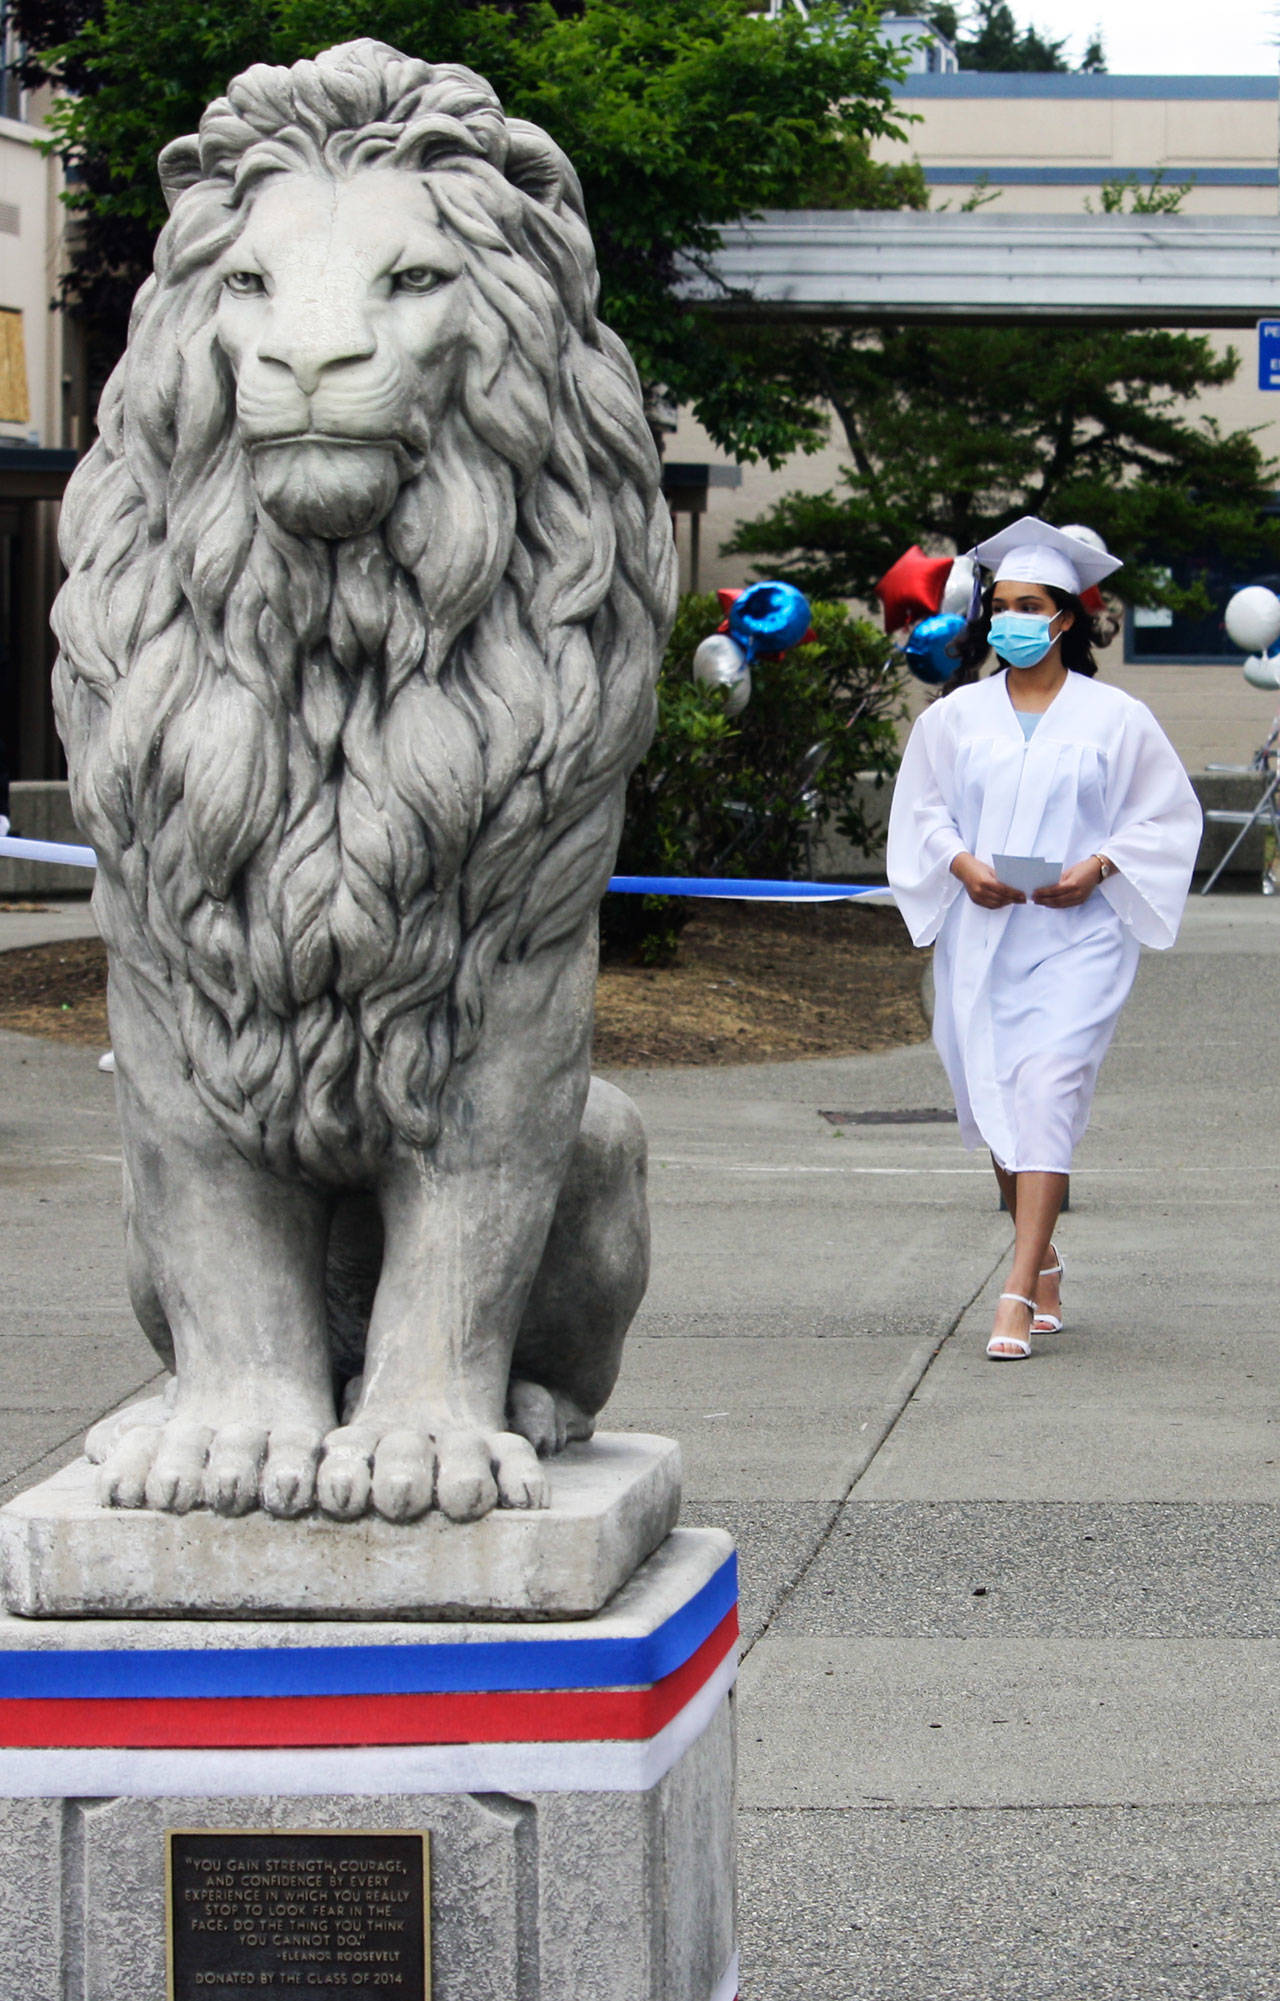 A Kent-Meridian High graduate walks toward the lion statue on campus. STEVE HUNTER, Kent Reporter